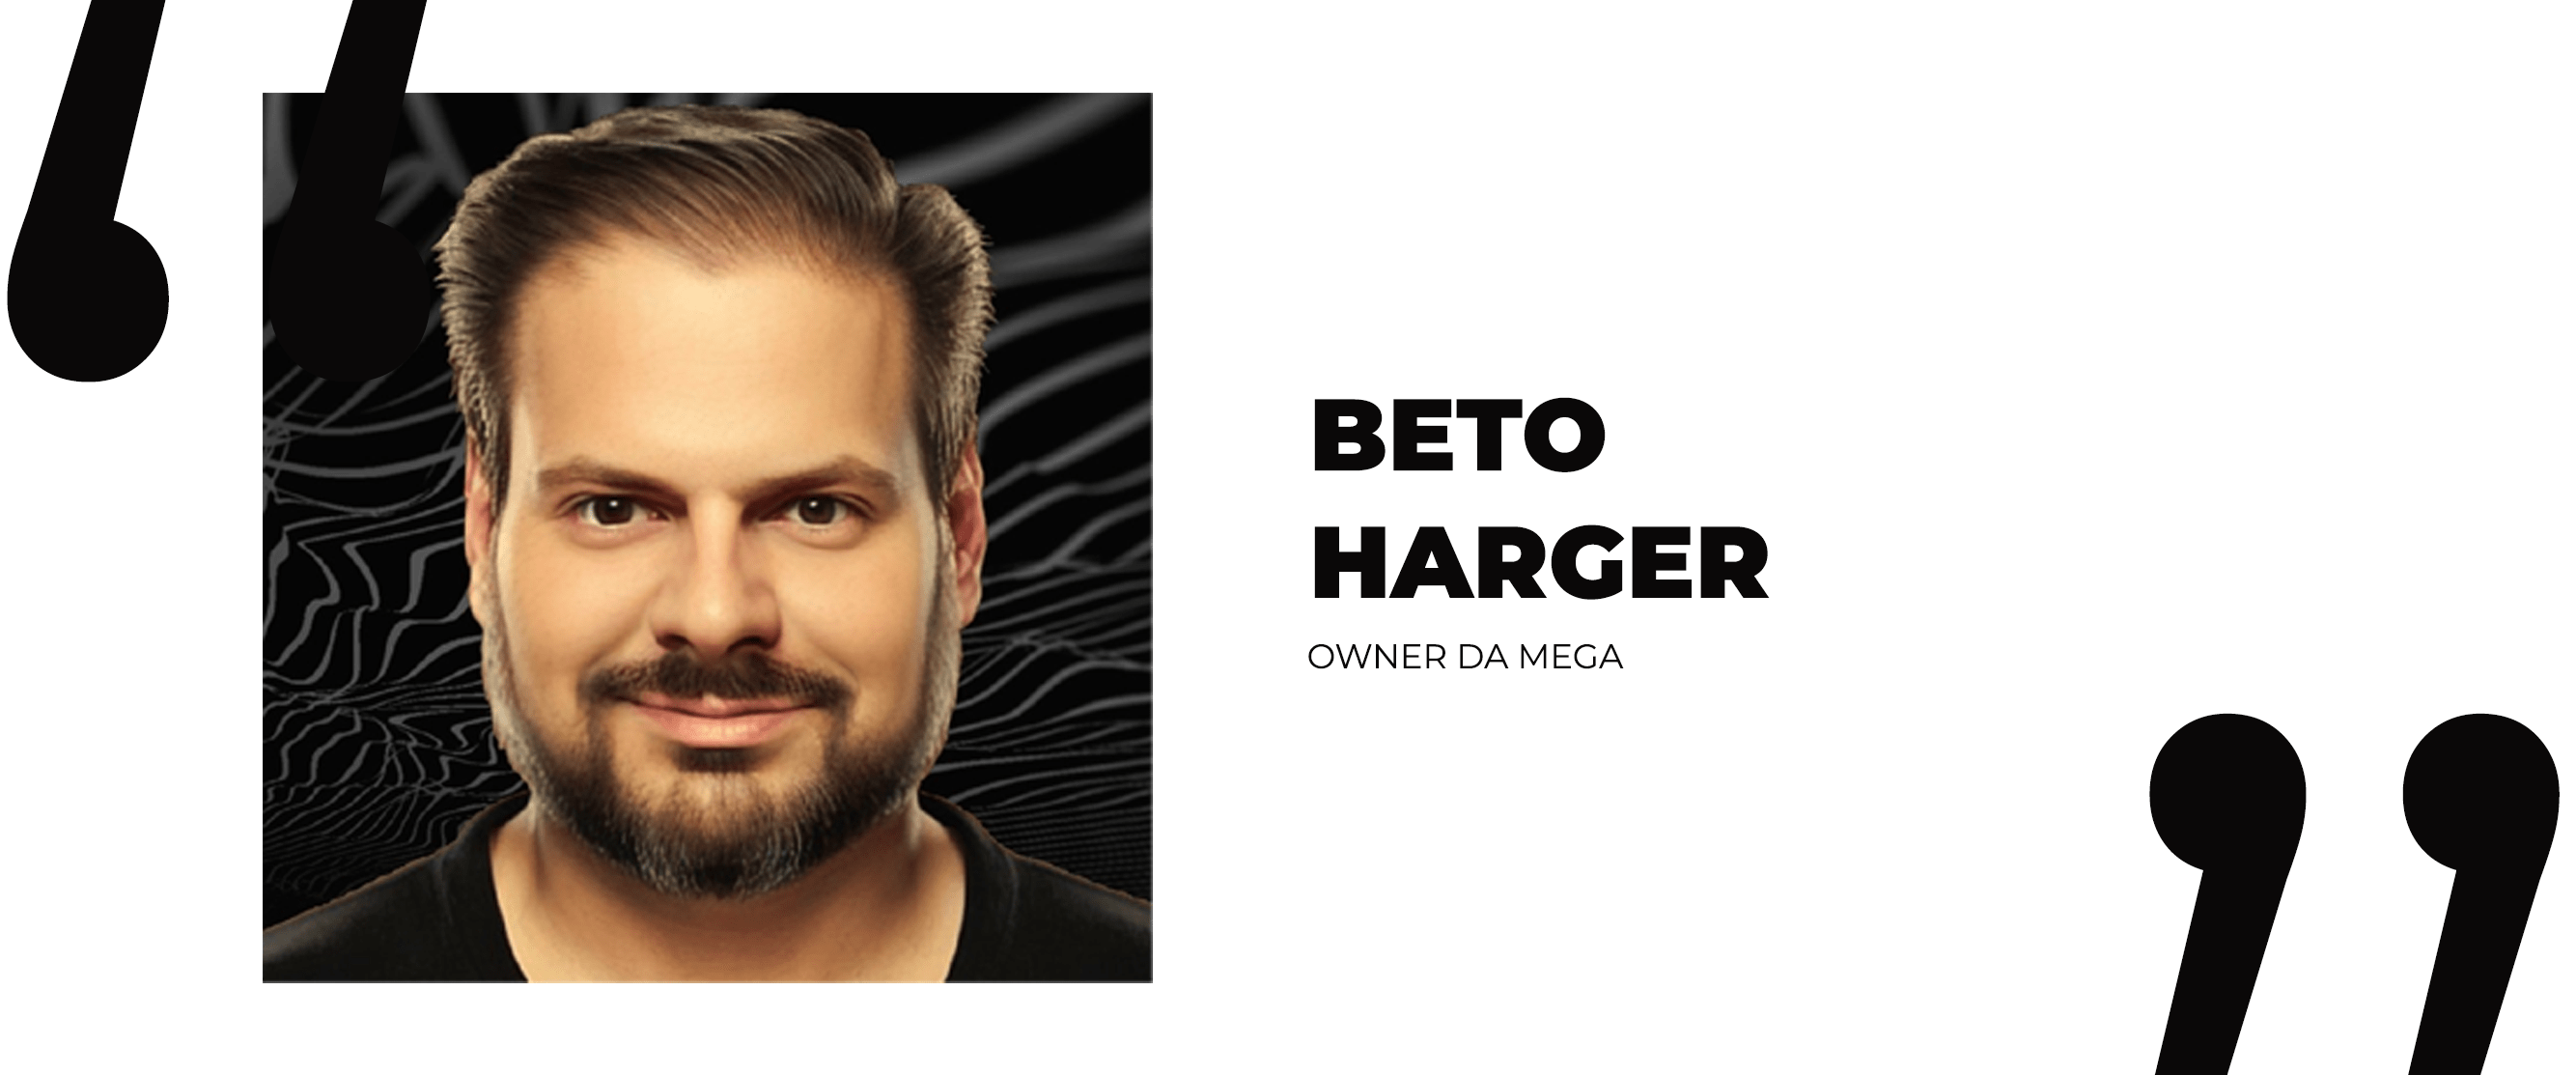 Beto Harger, Owner da Mega.